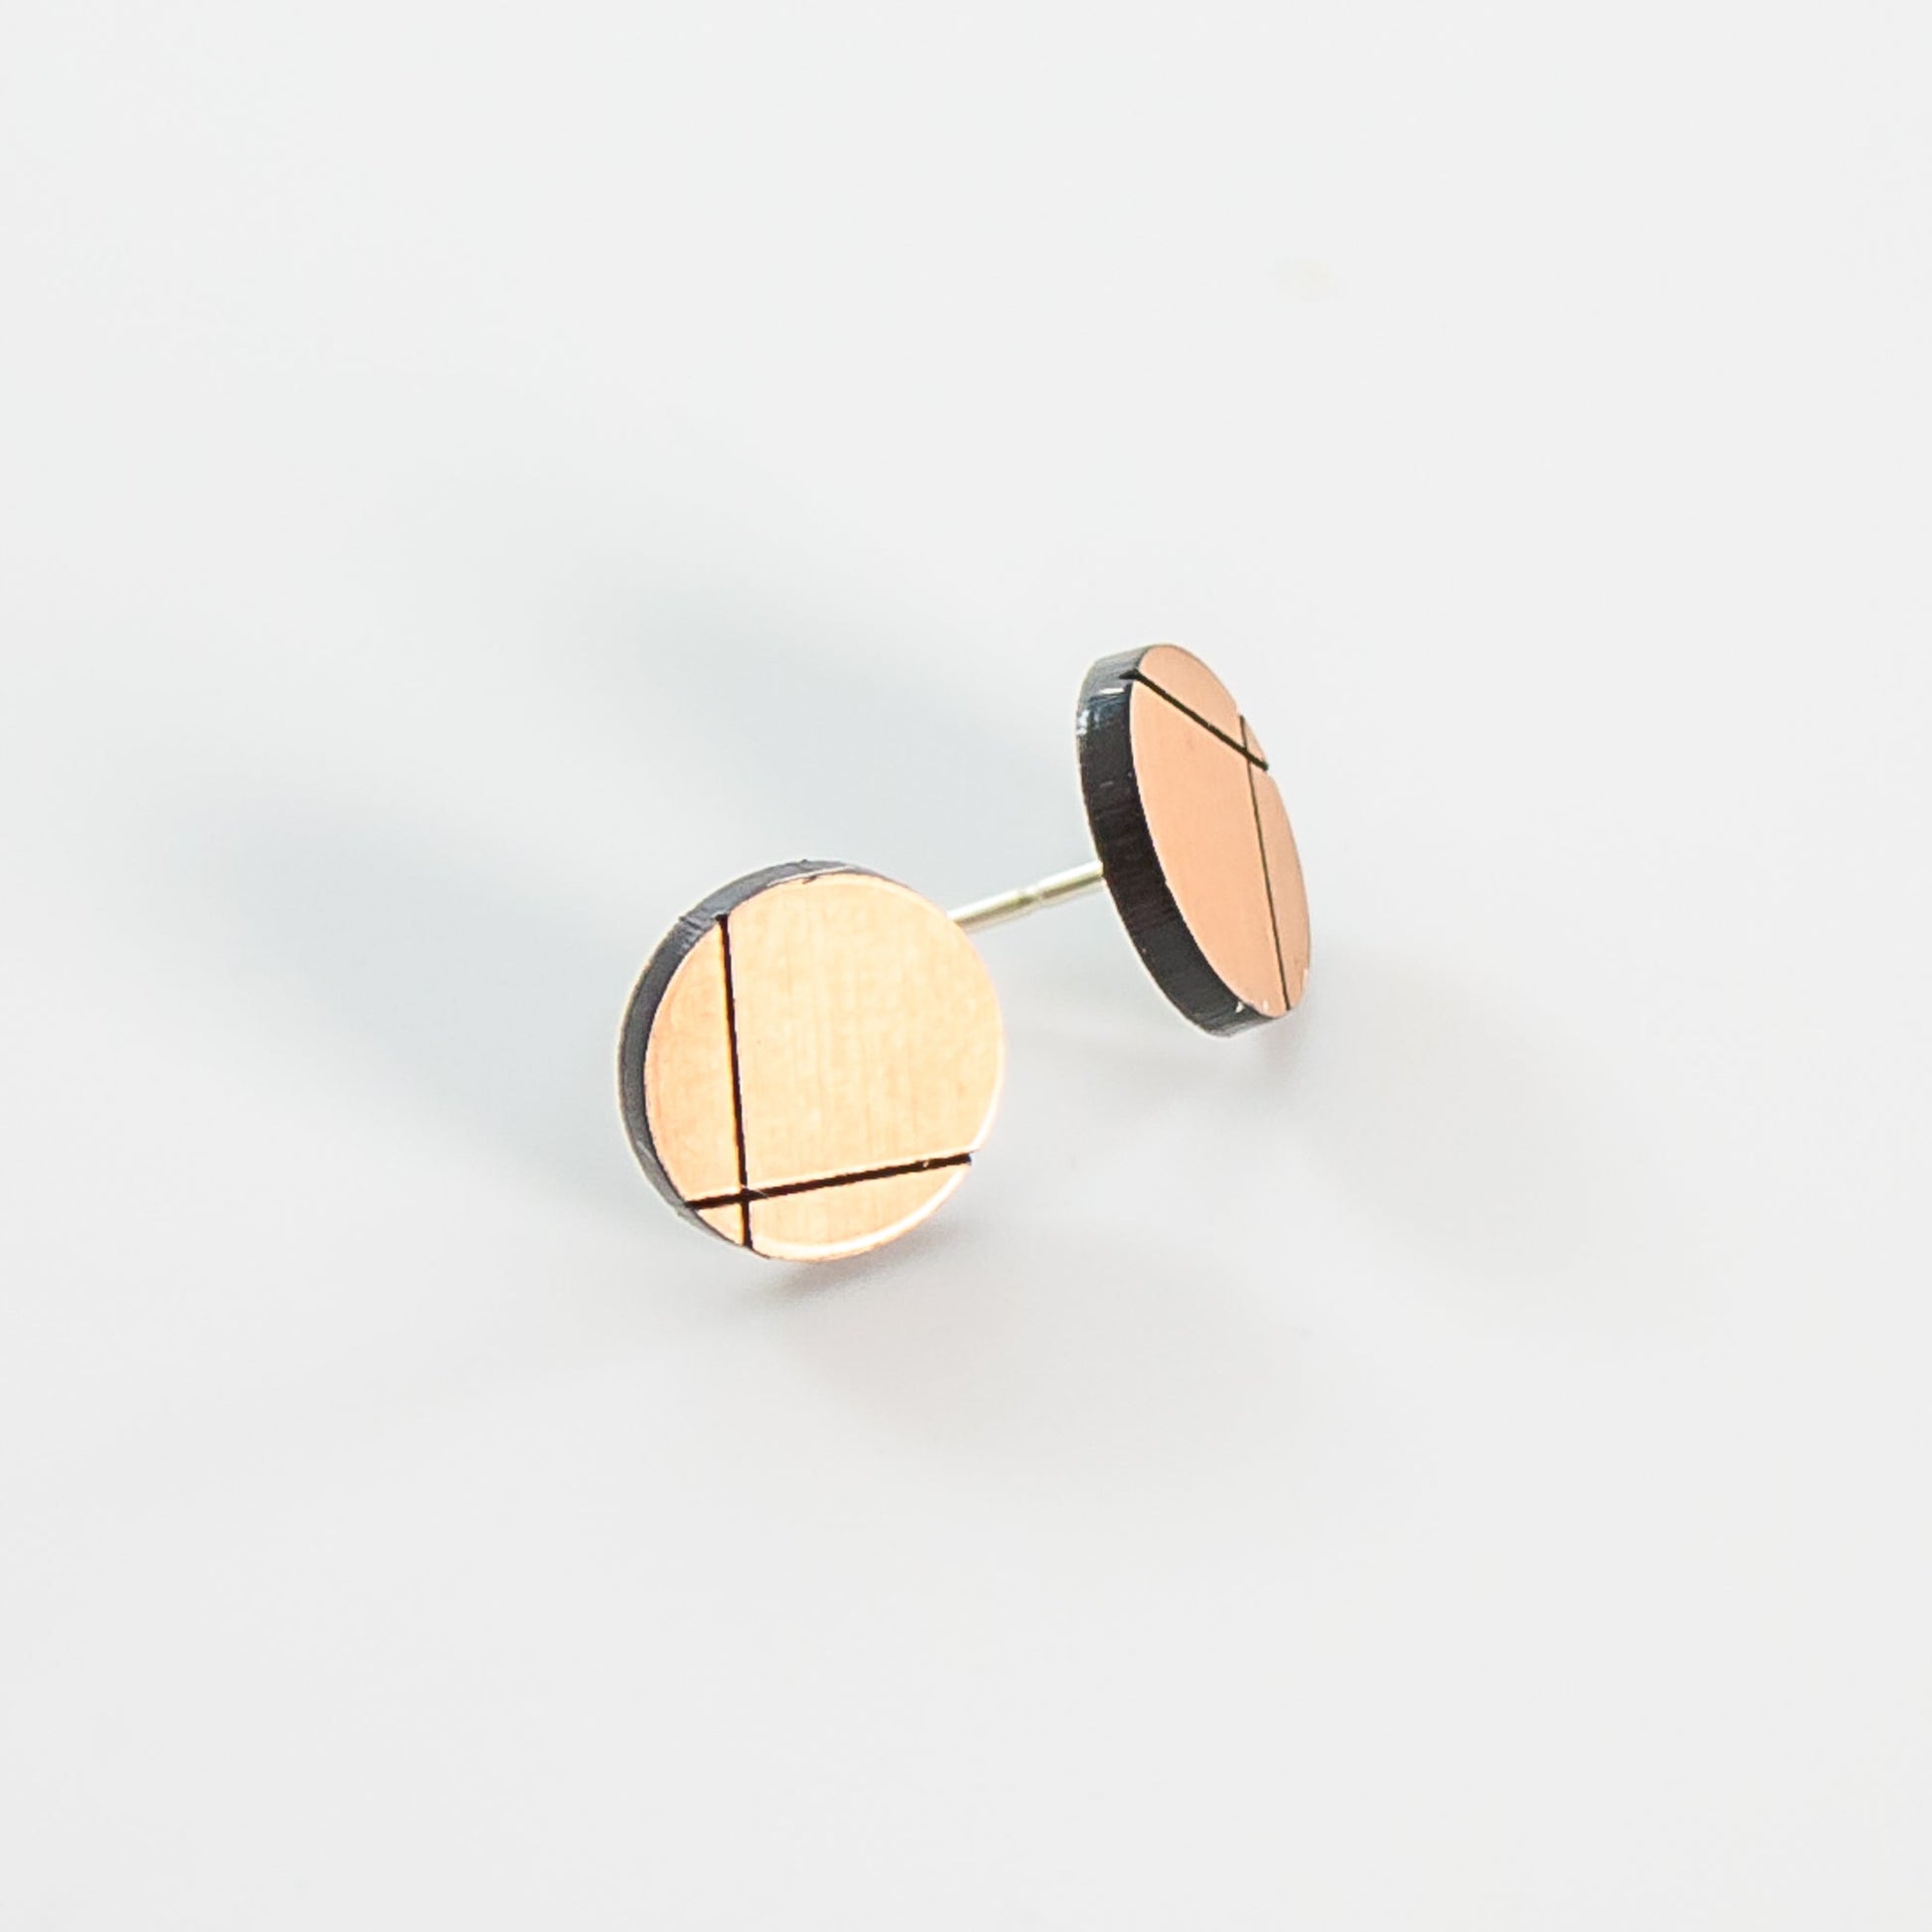 Laser Cut Geometric Earrings - Copper Acrylic GeoStud Circles - by LeeMo Designs in Bend, Oregon